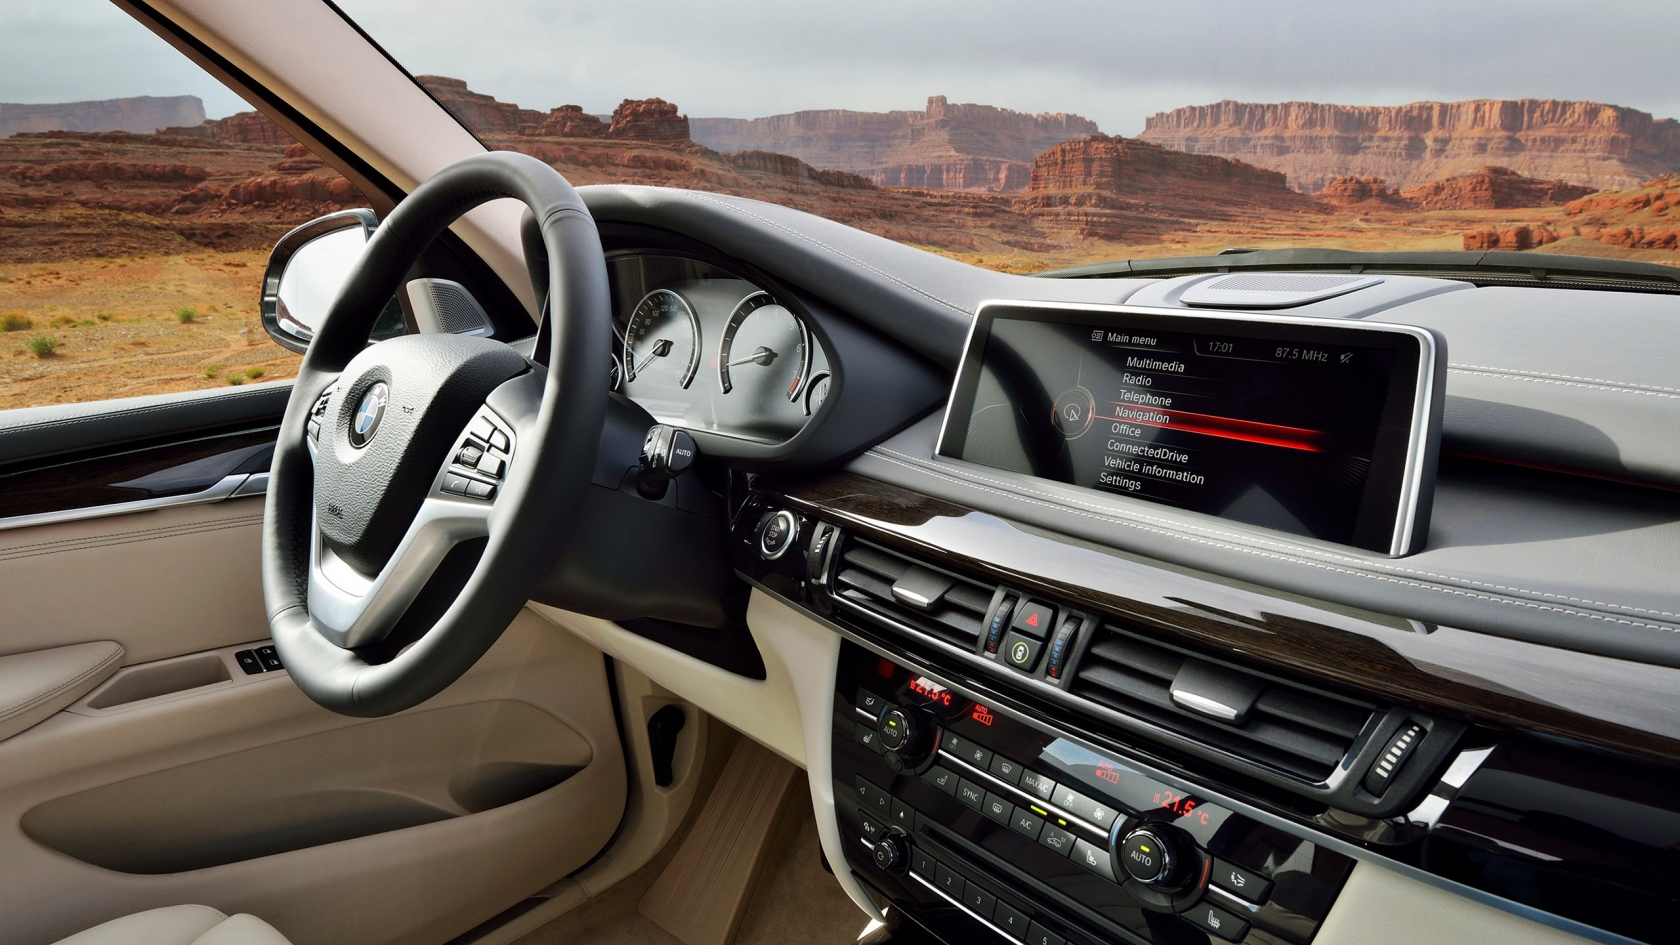 BMW X5 2014 Dashboard for 1680 x 945 HDTV resolution